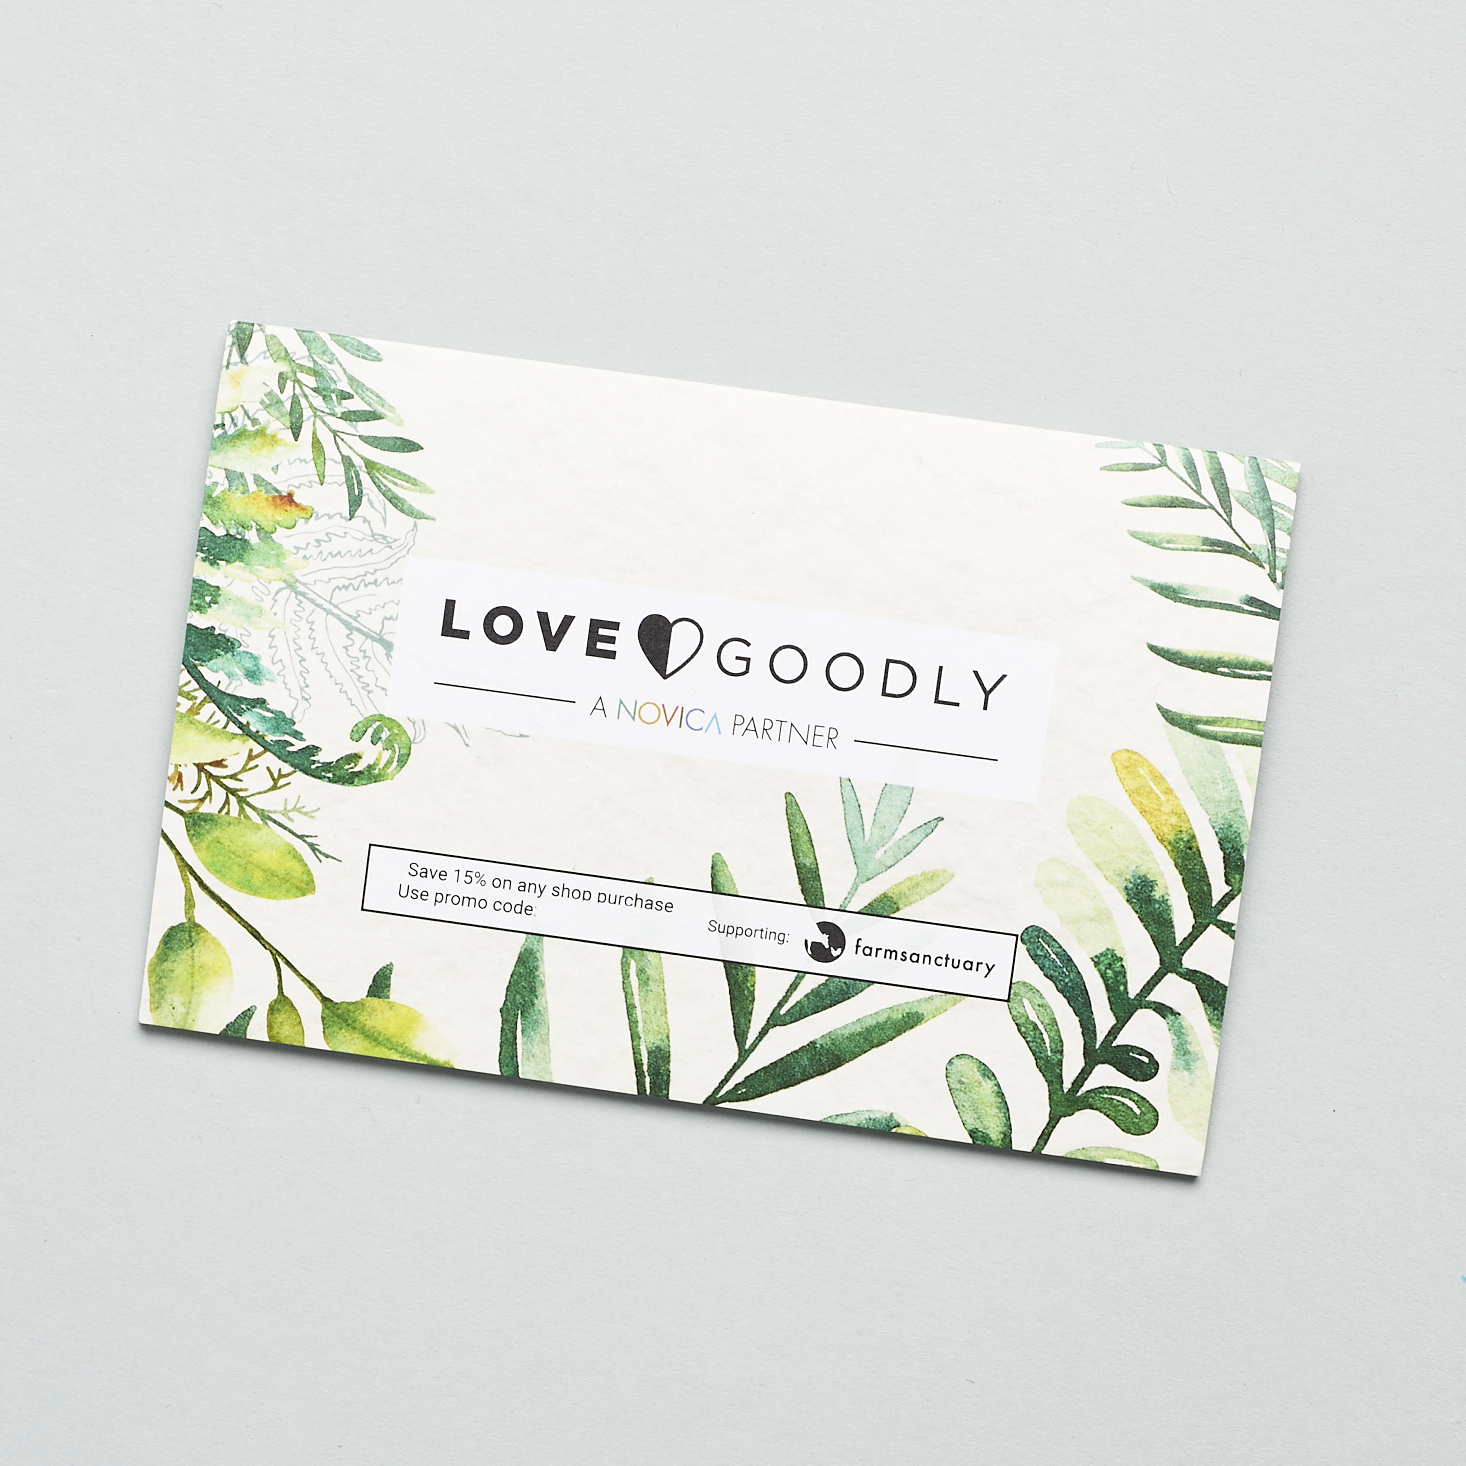 Love Goodly April 2021 card